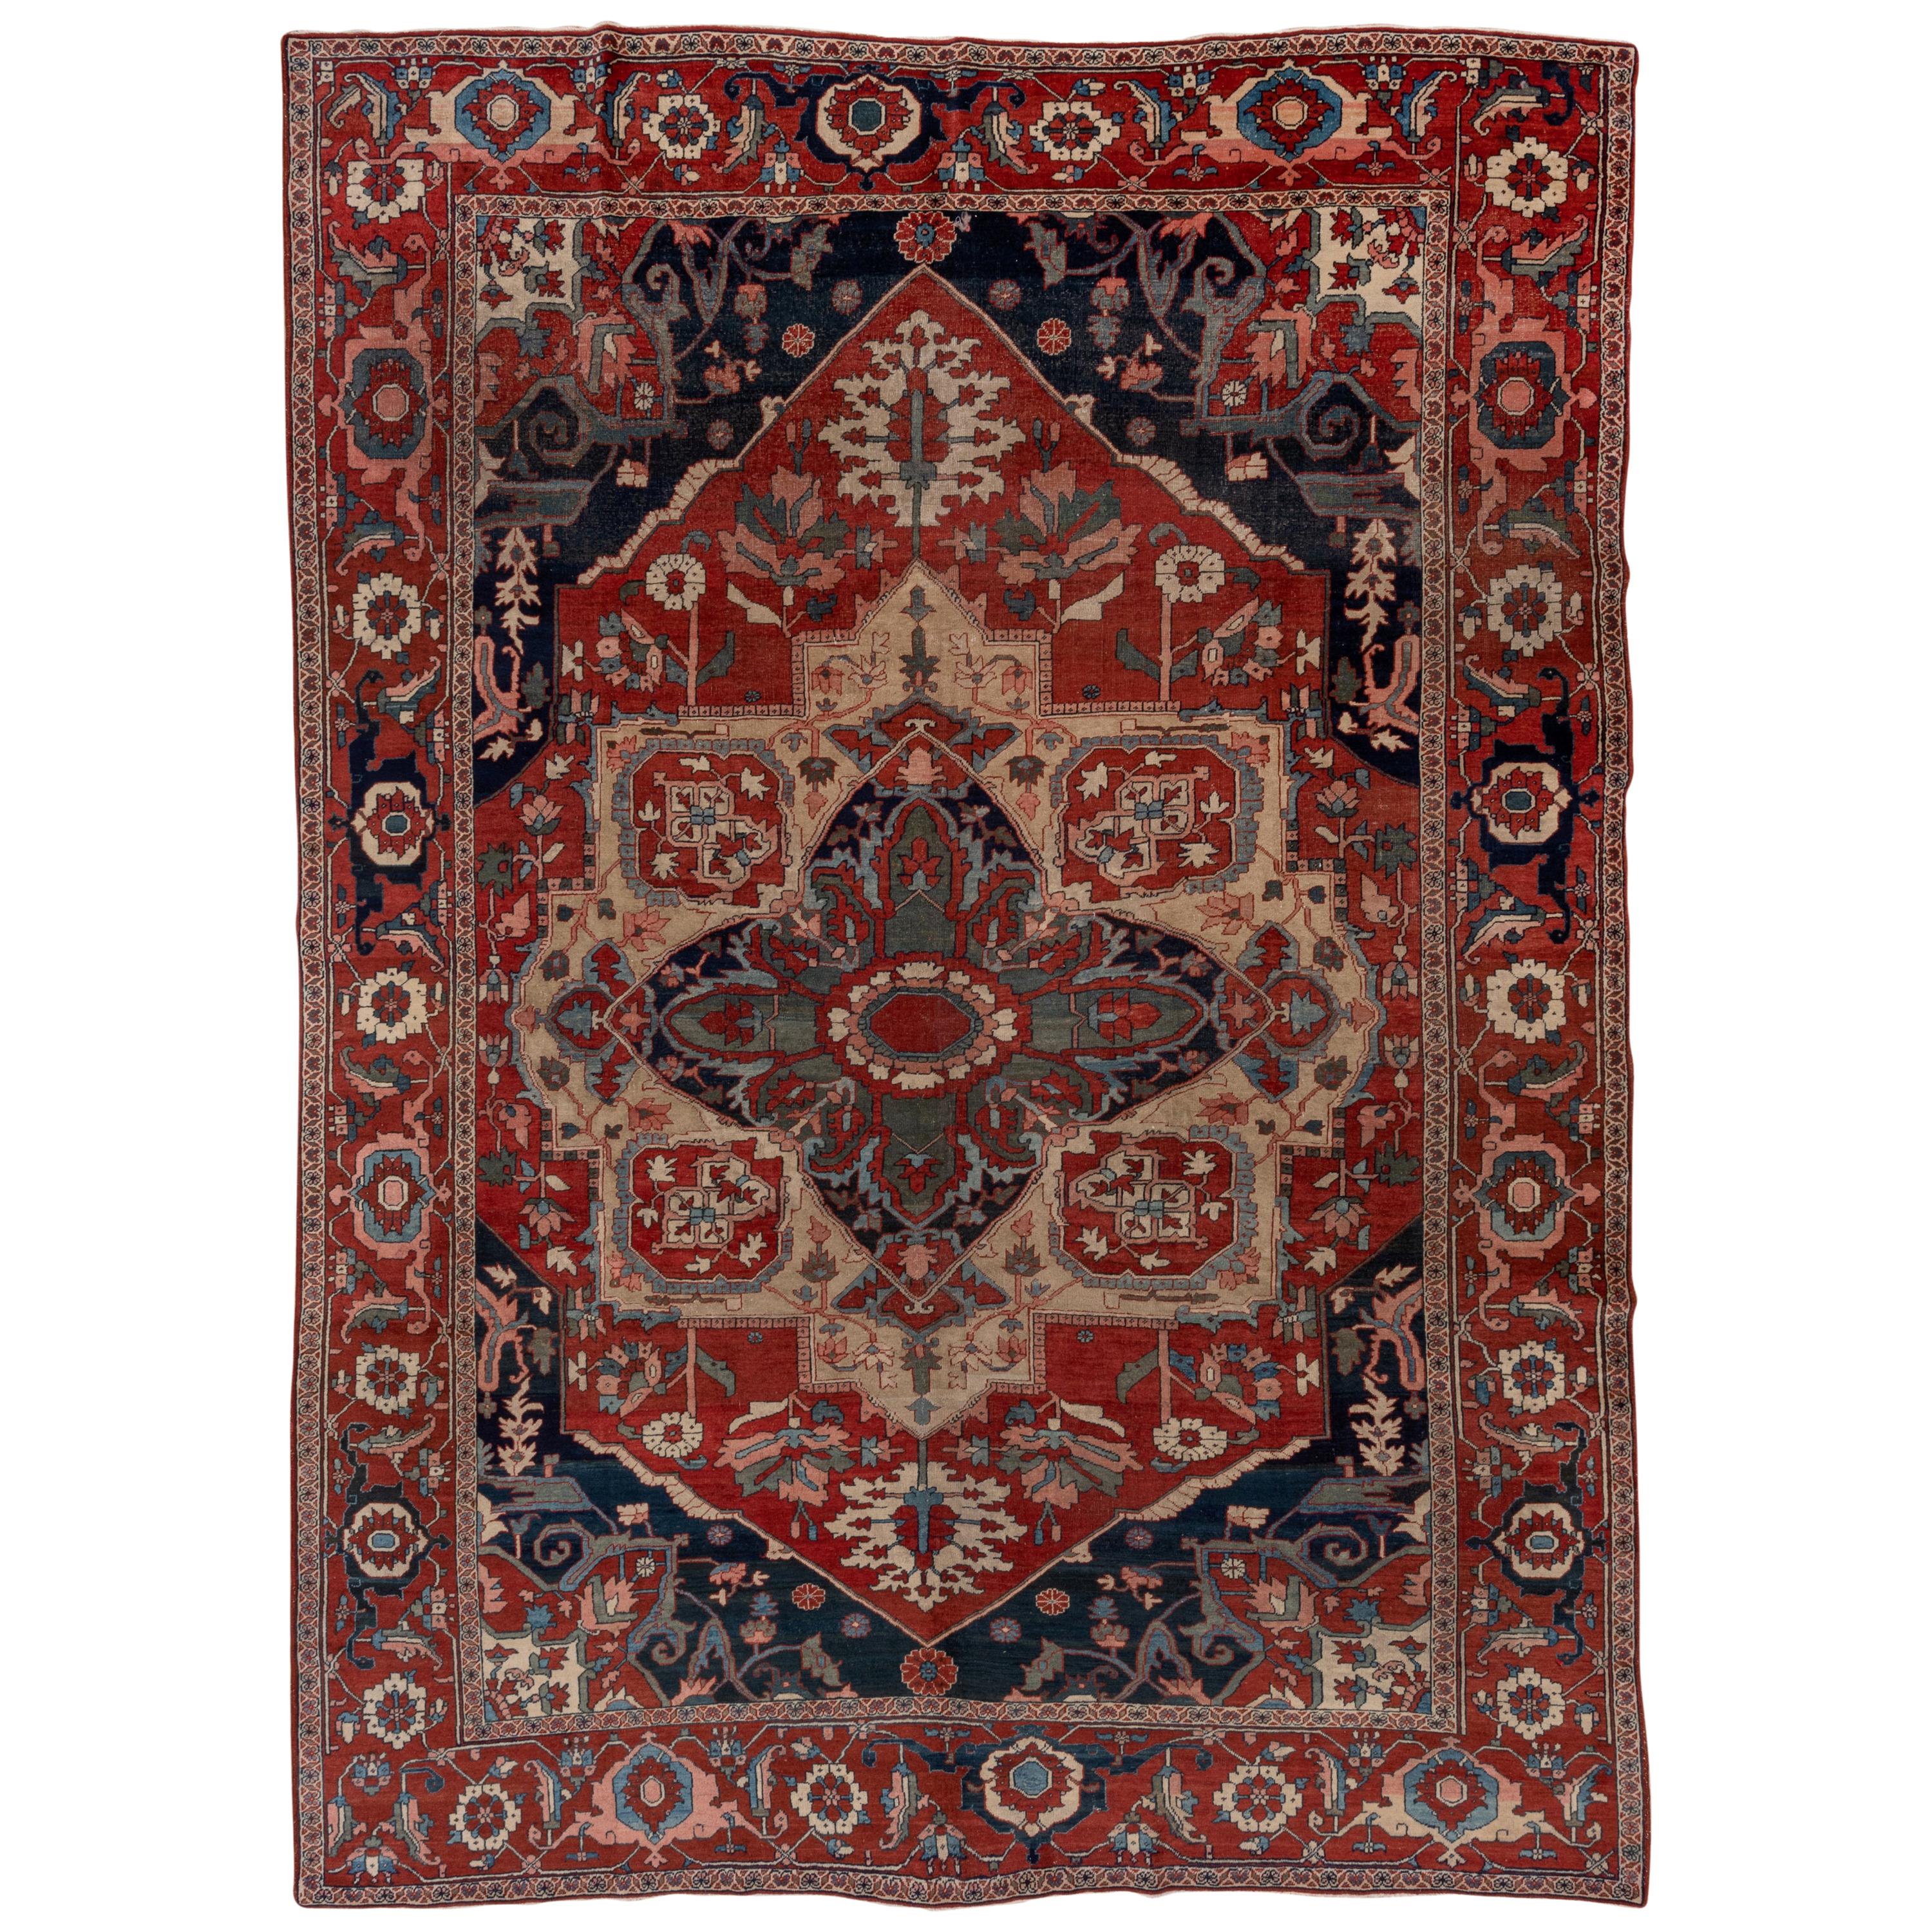 Antique Persian Serapi Carpet, circa 1900s